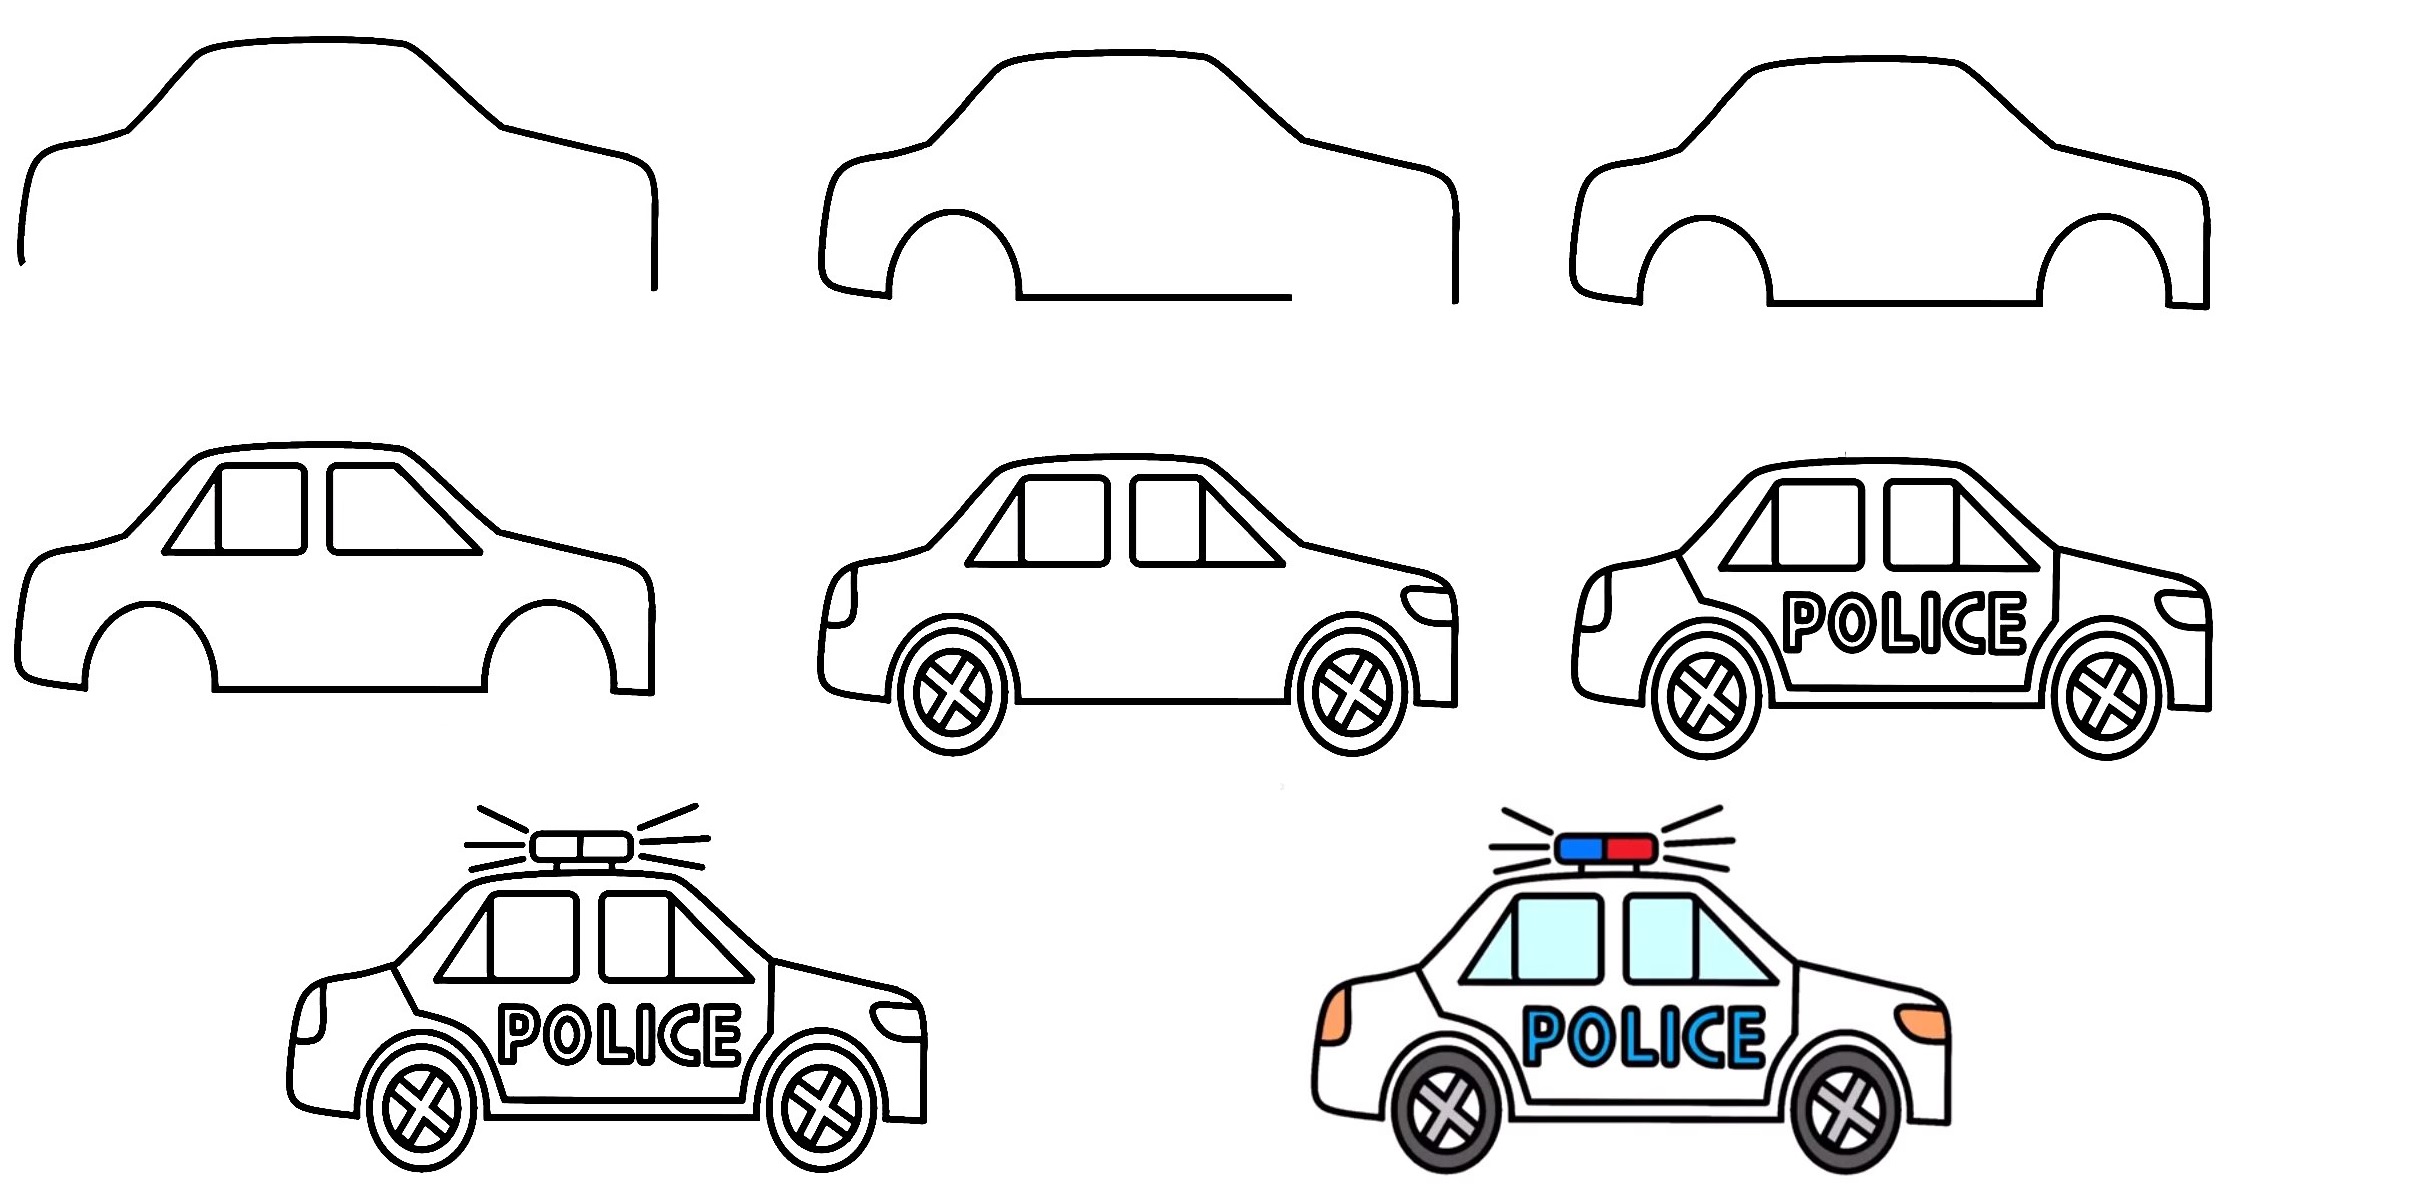 Police-car-drawing